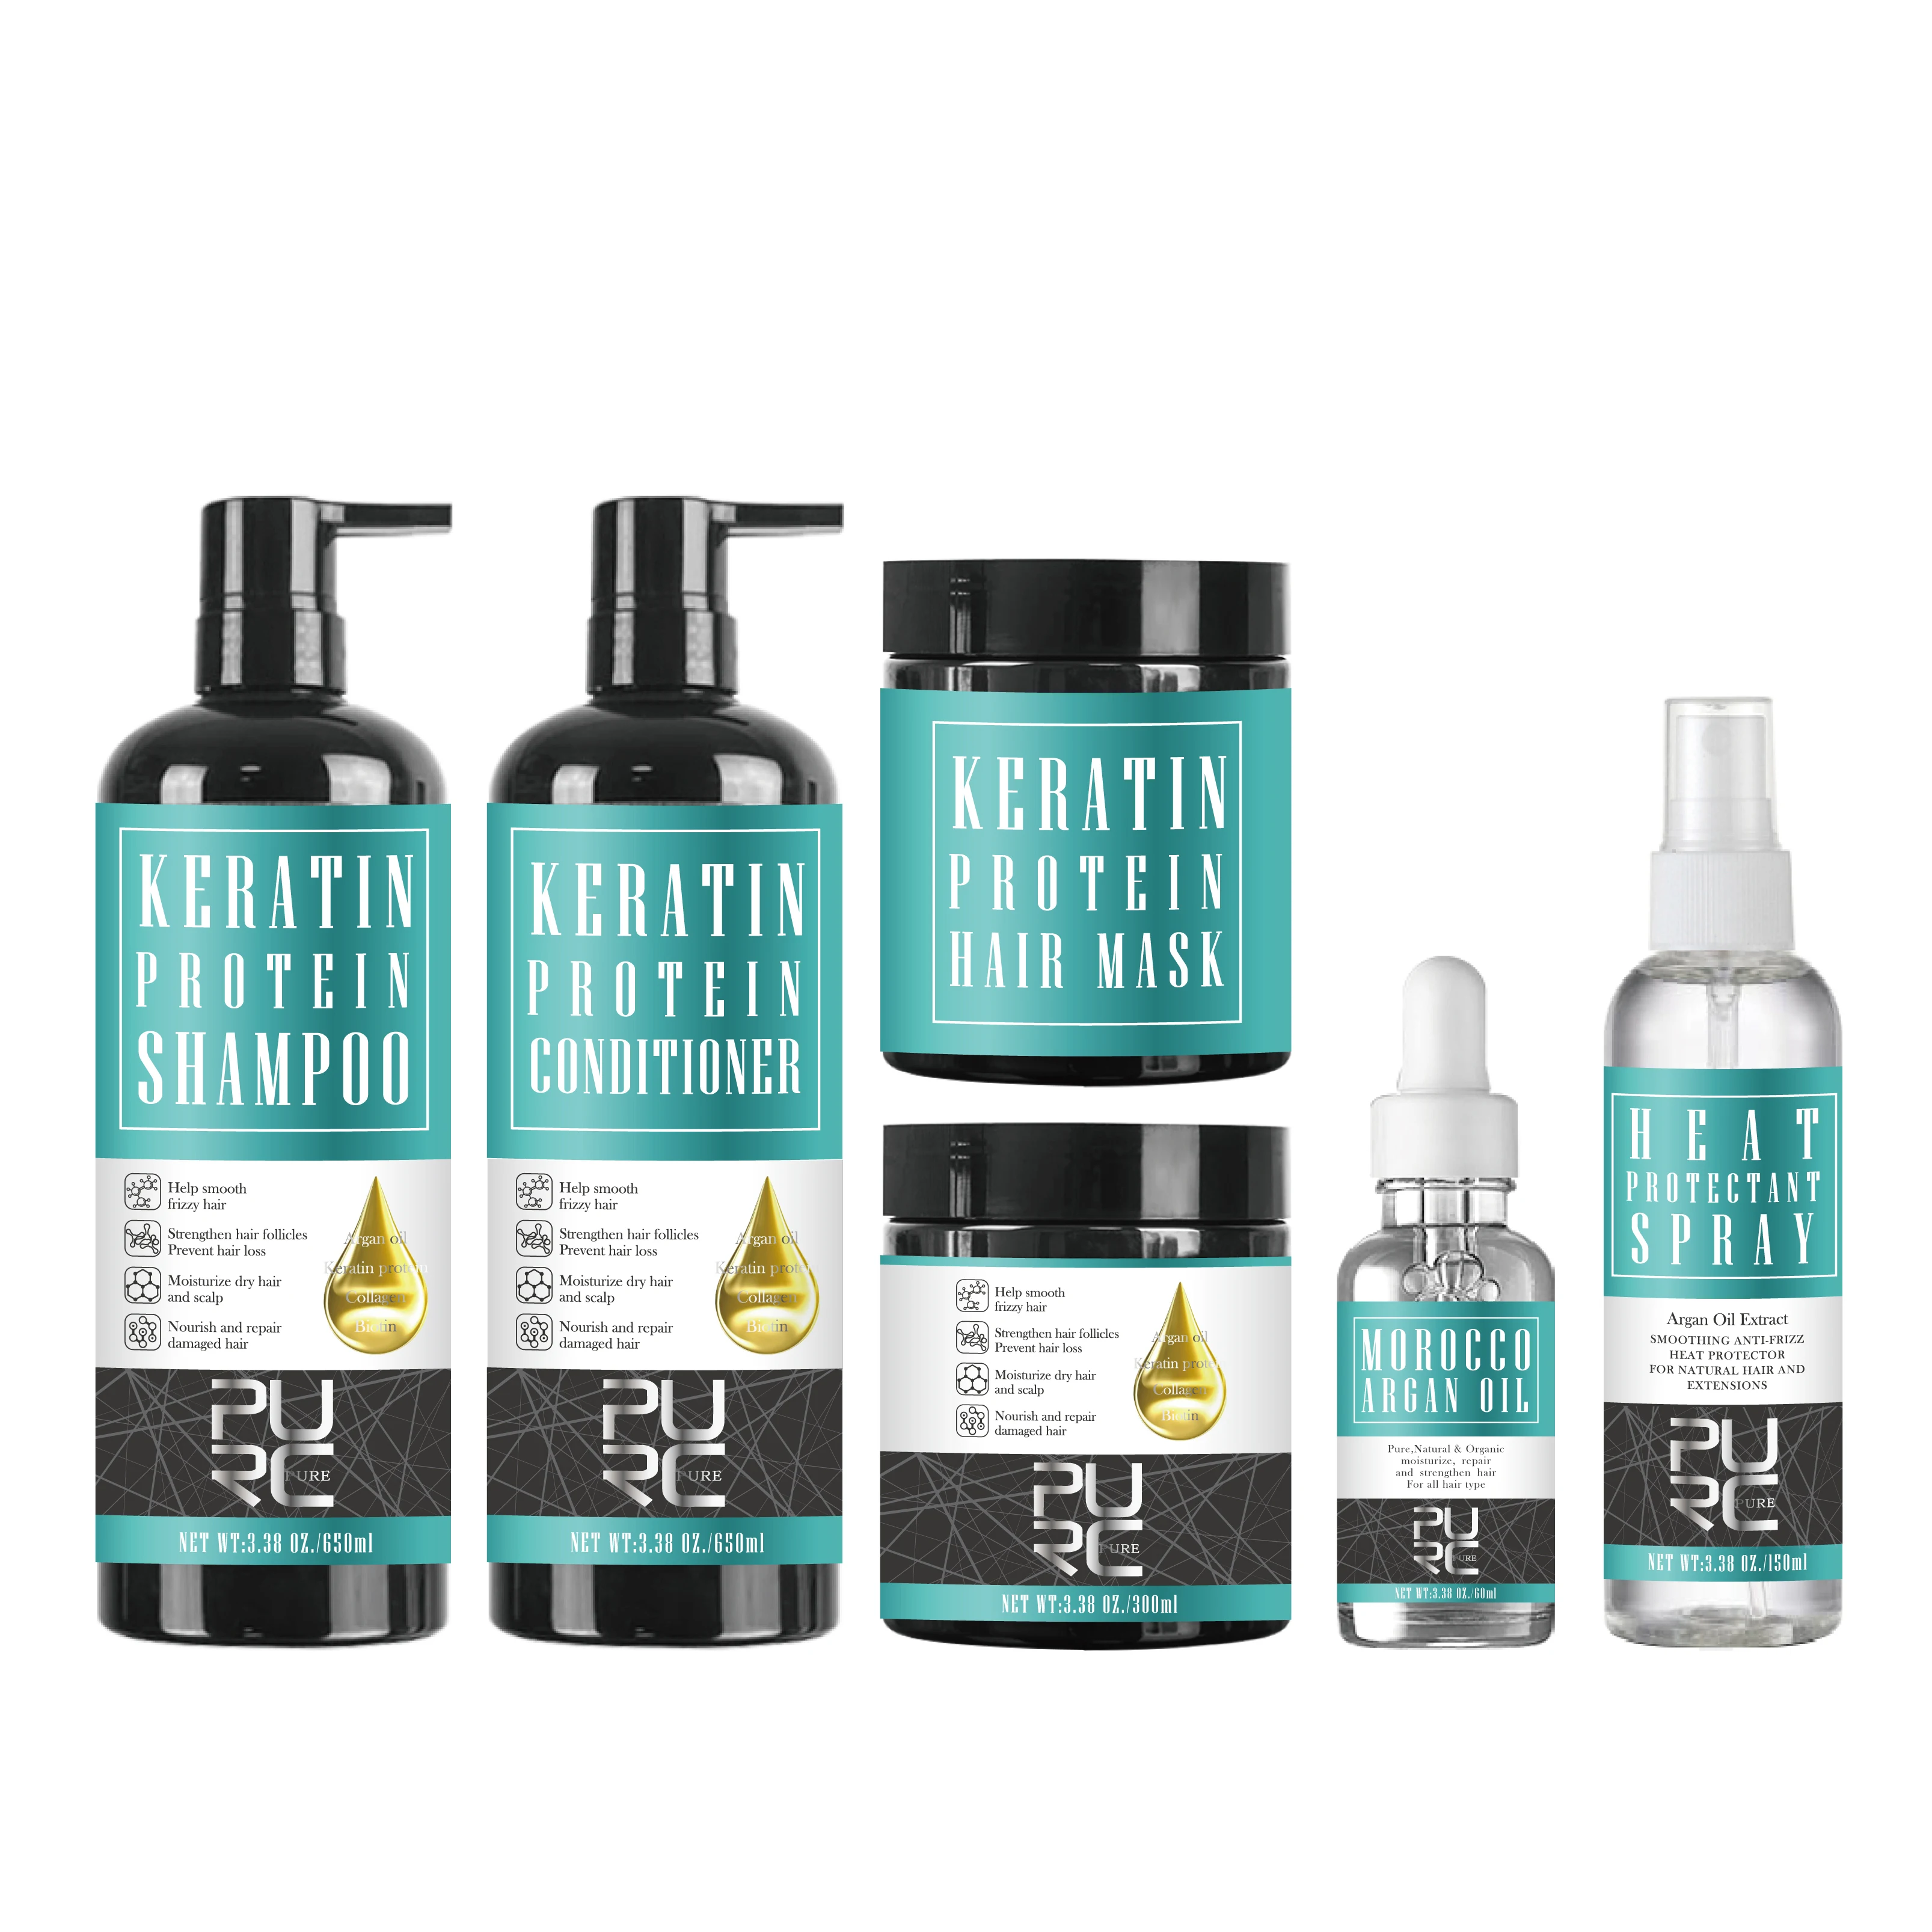 

Professional Salon Organic Keratin Shampoo Collagen Protein Hair Shampoo Private Label Natural Shampoo And Conditioner Care Set